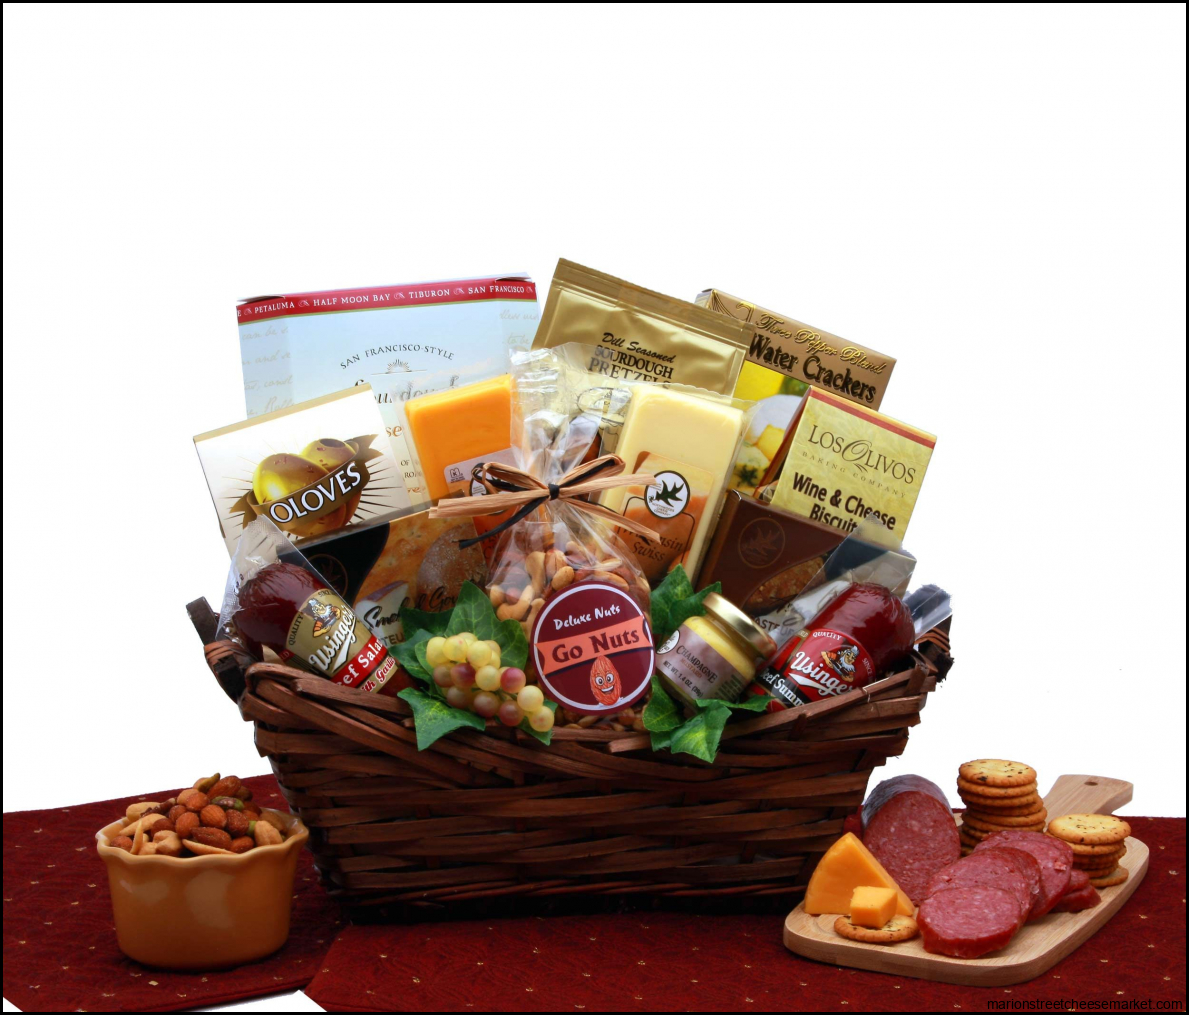 Gourmet Delights Gift Basket | Gift baskets for men, Water crackers ...